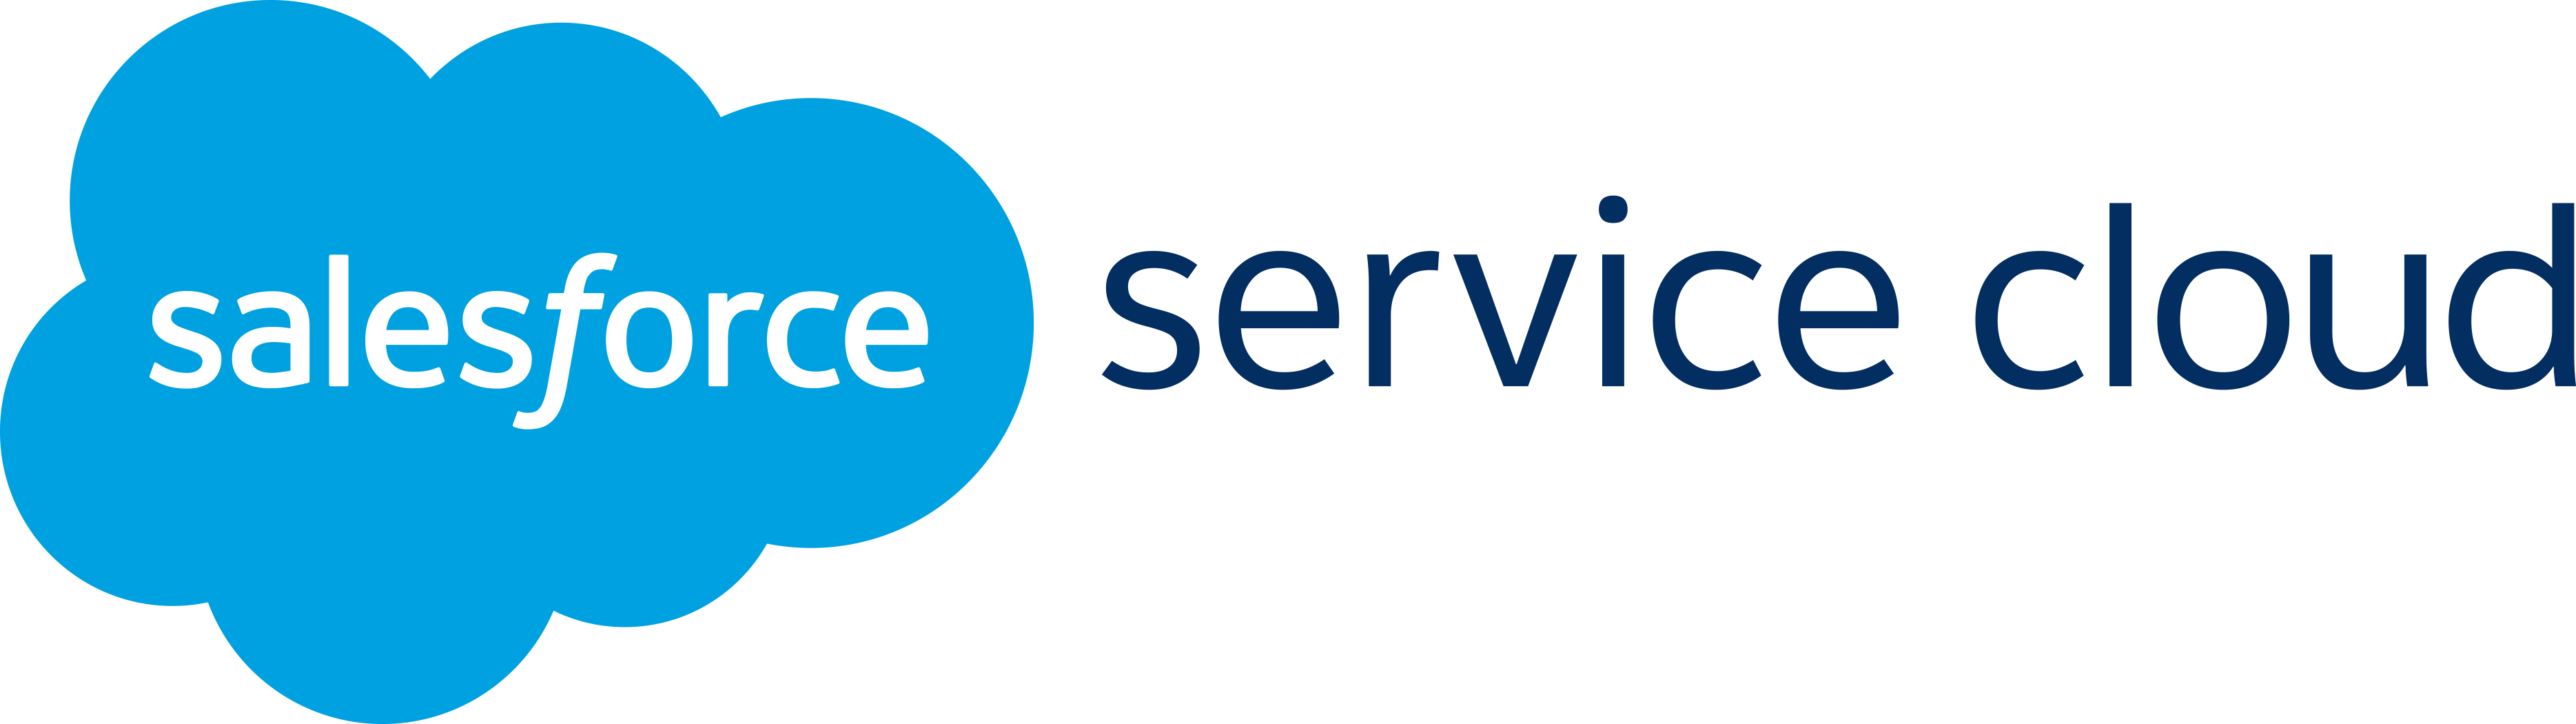 2017sf_ServiceCloud_logo_RGB